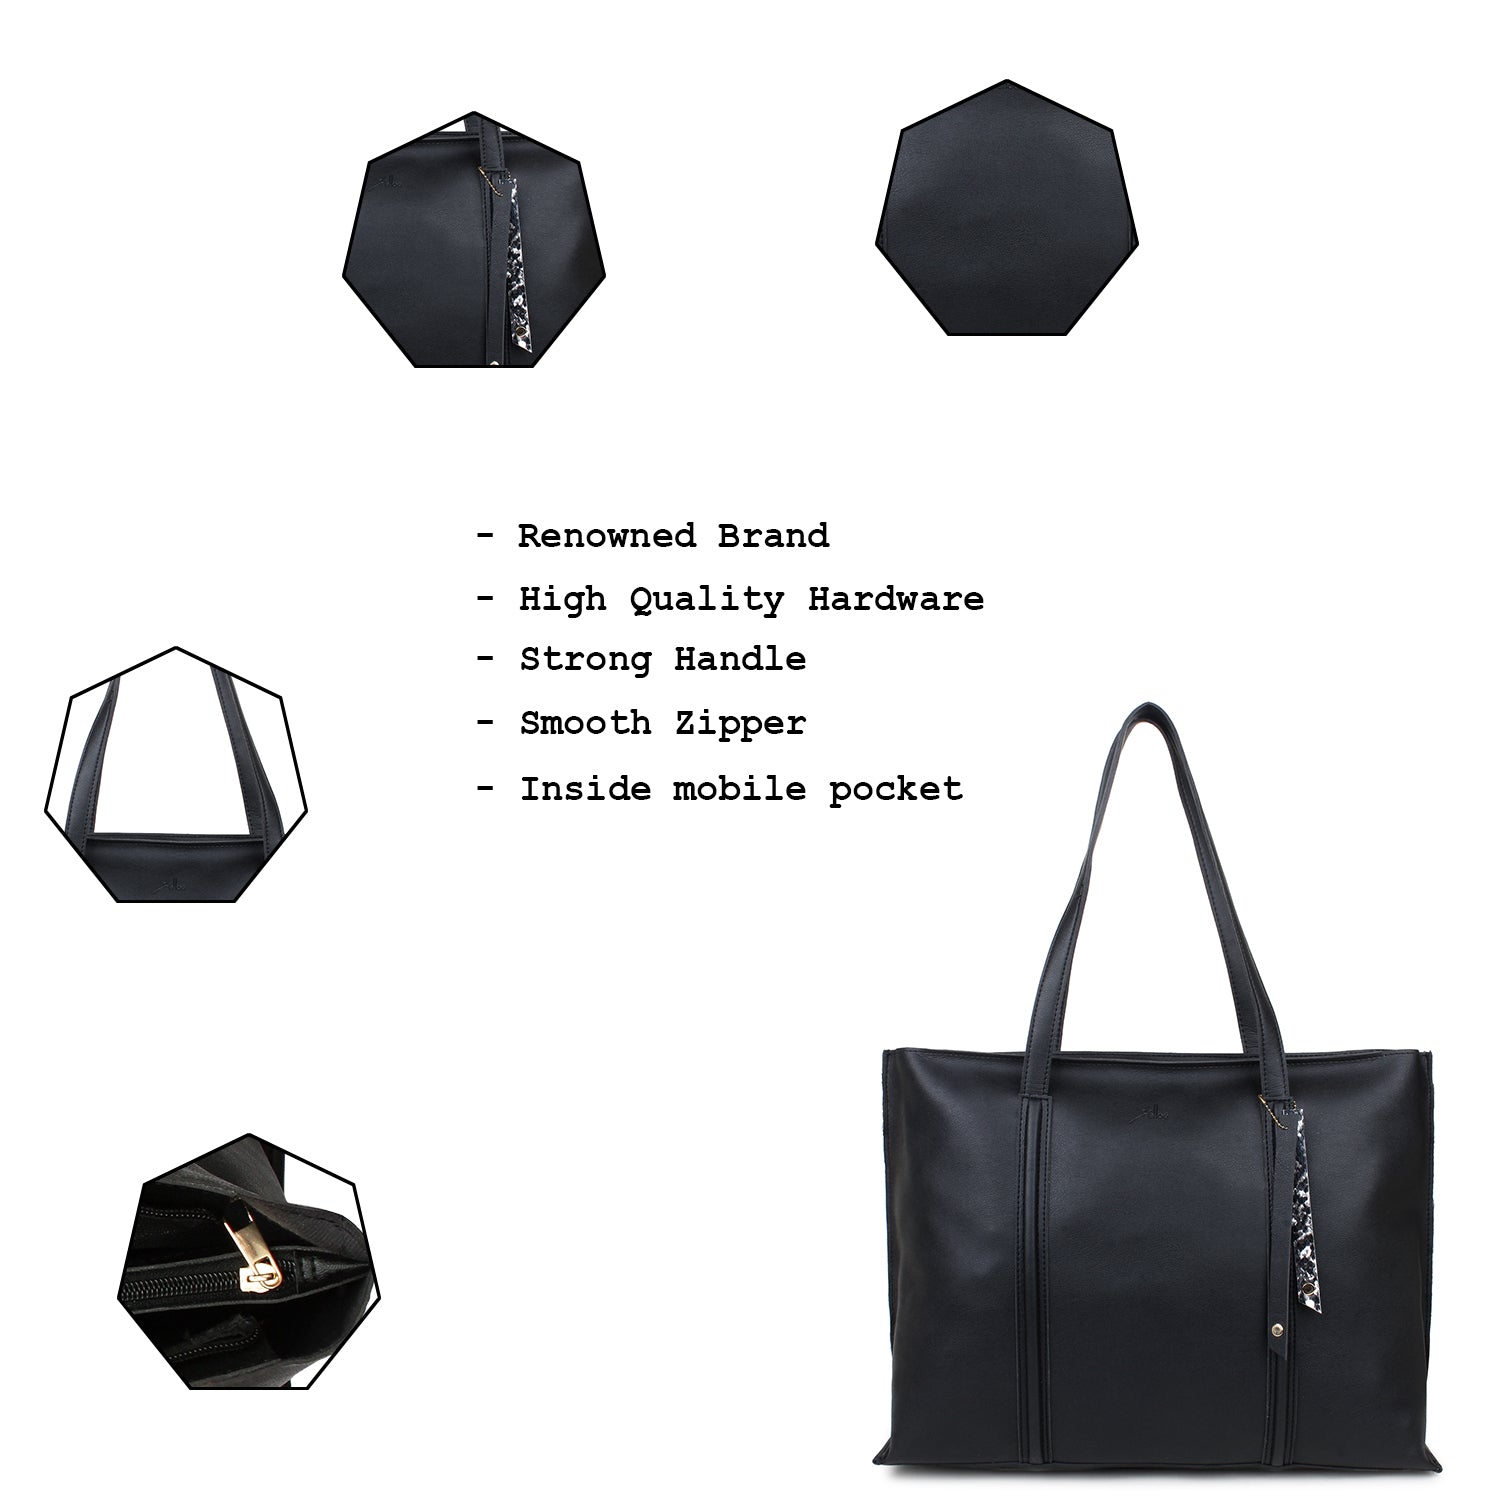 Black Tote & Laptop bag for Women